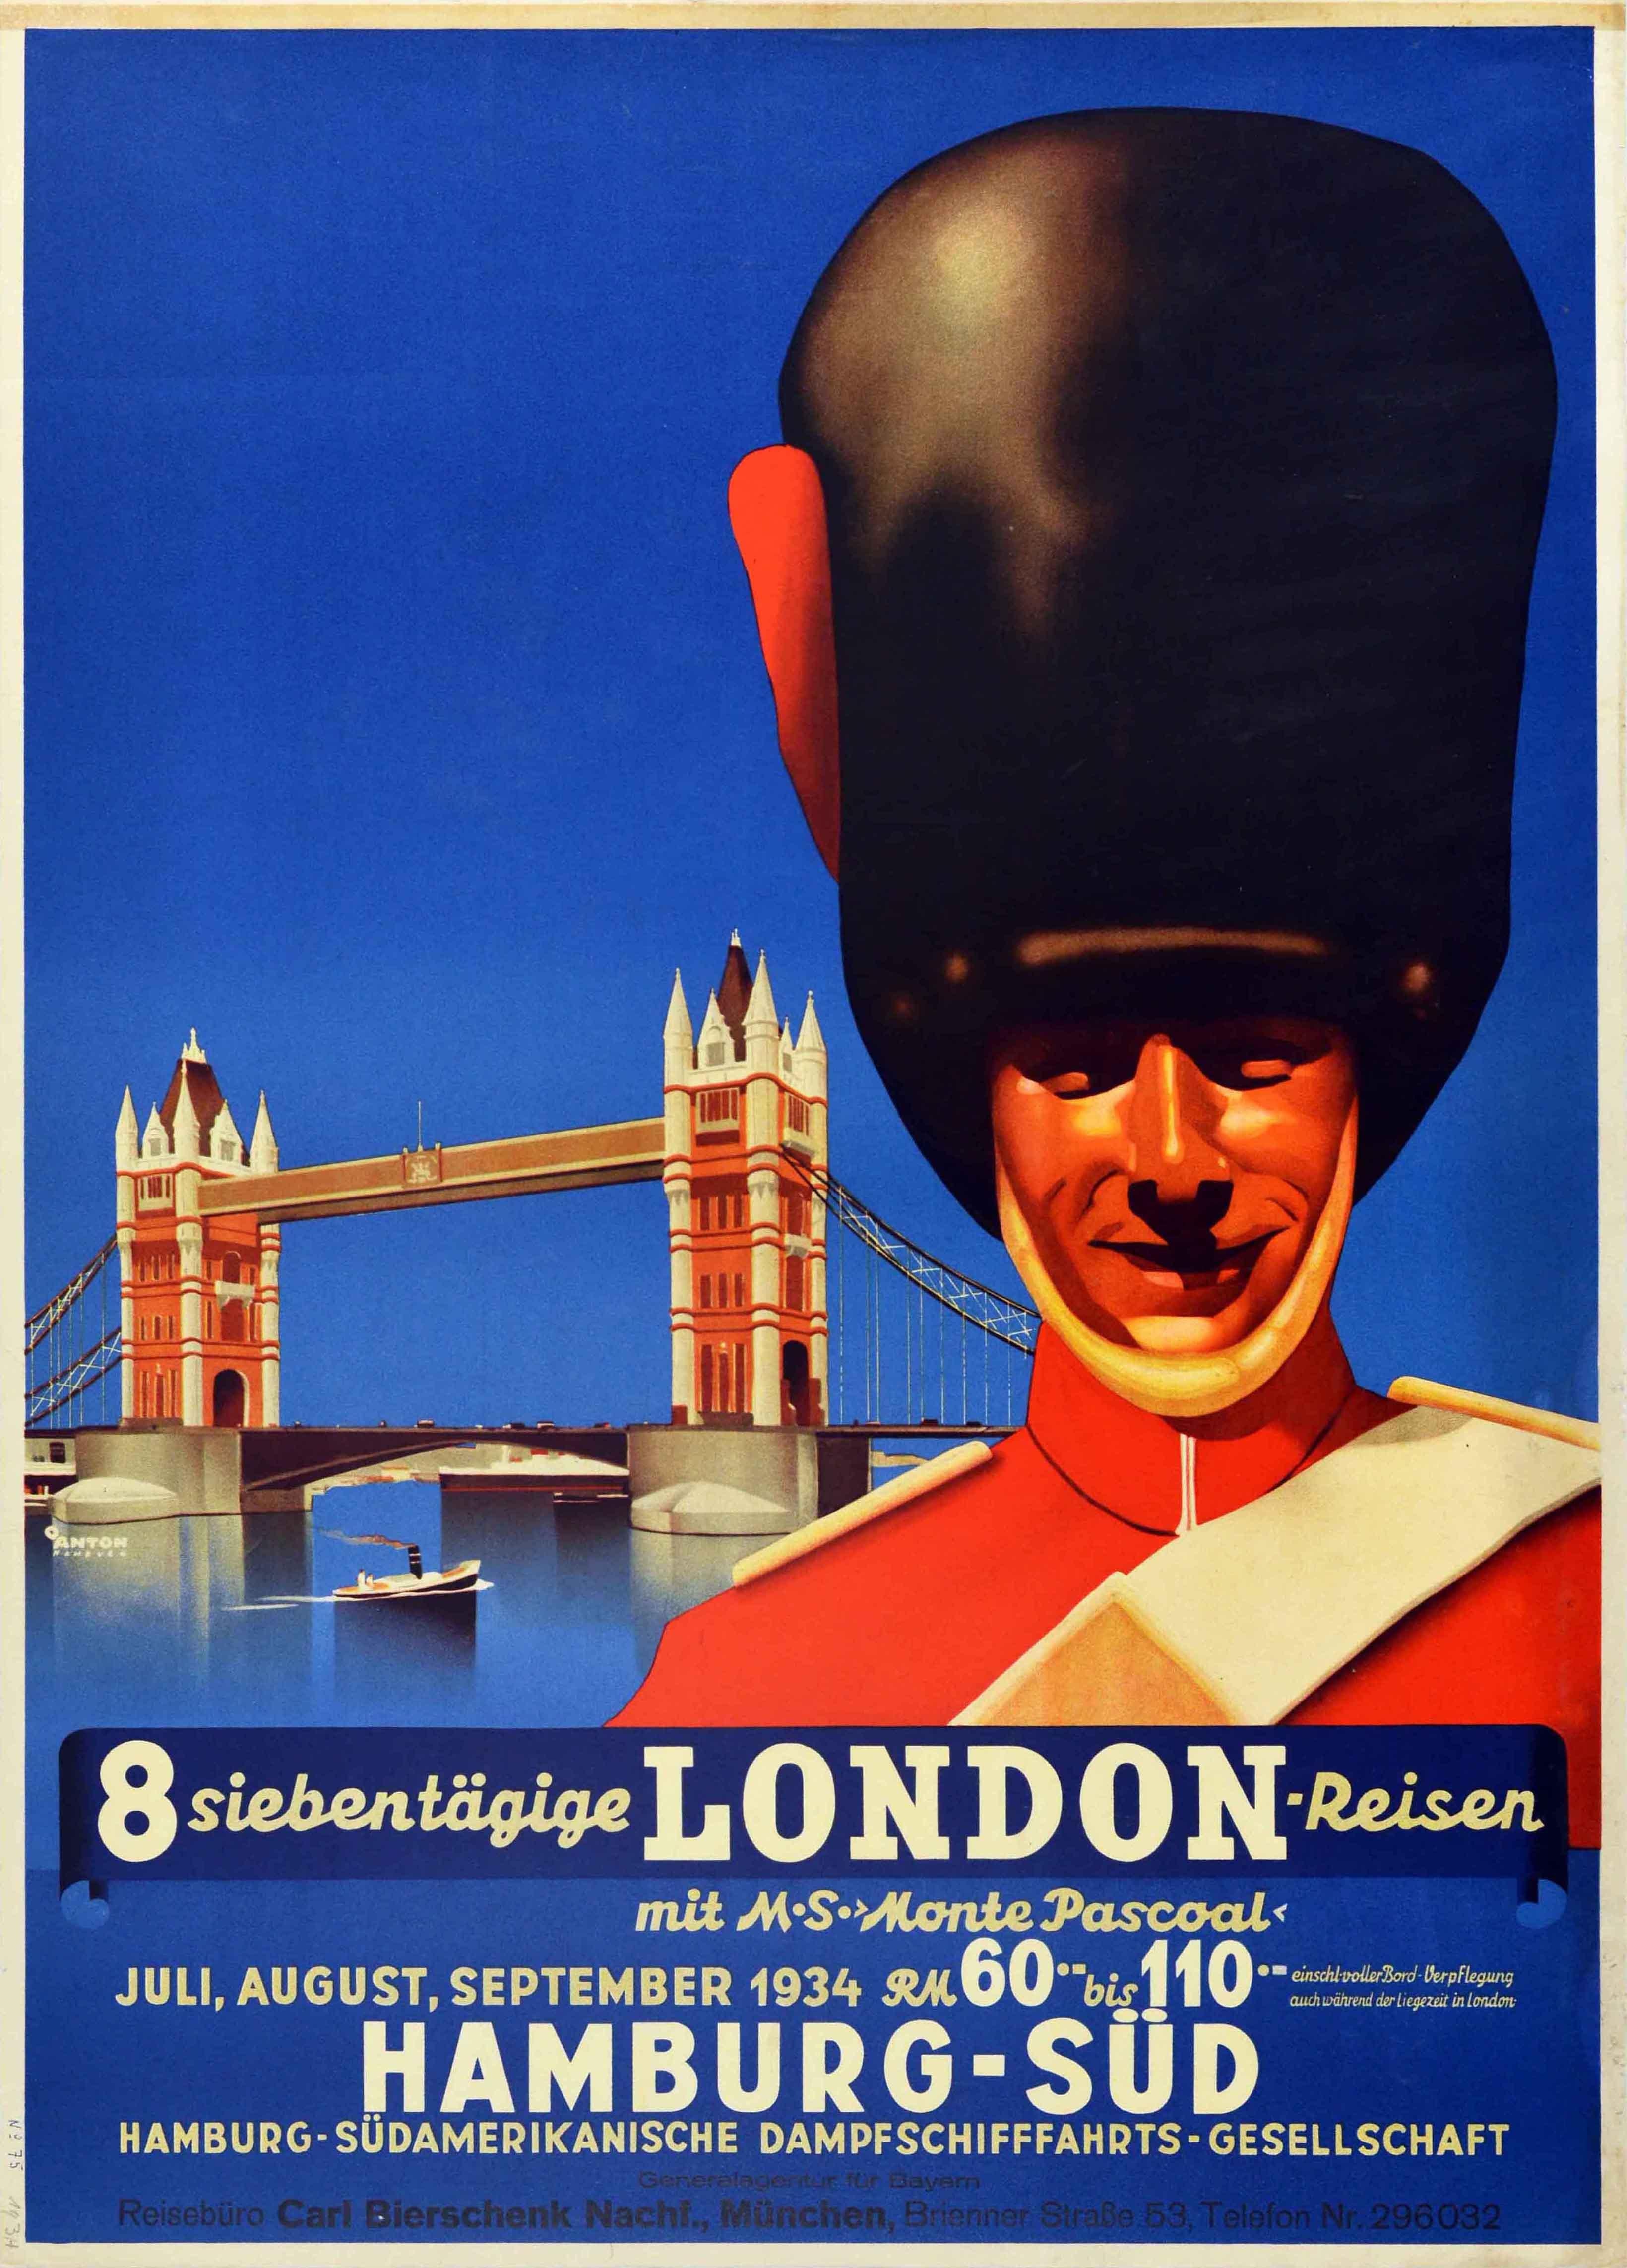 Ottomar Anton Print - Original Vintage Travel Poster London Cruise Ft. Royal Guard Tower Bridge Design